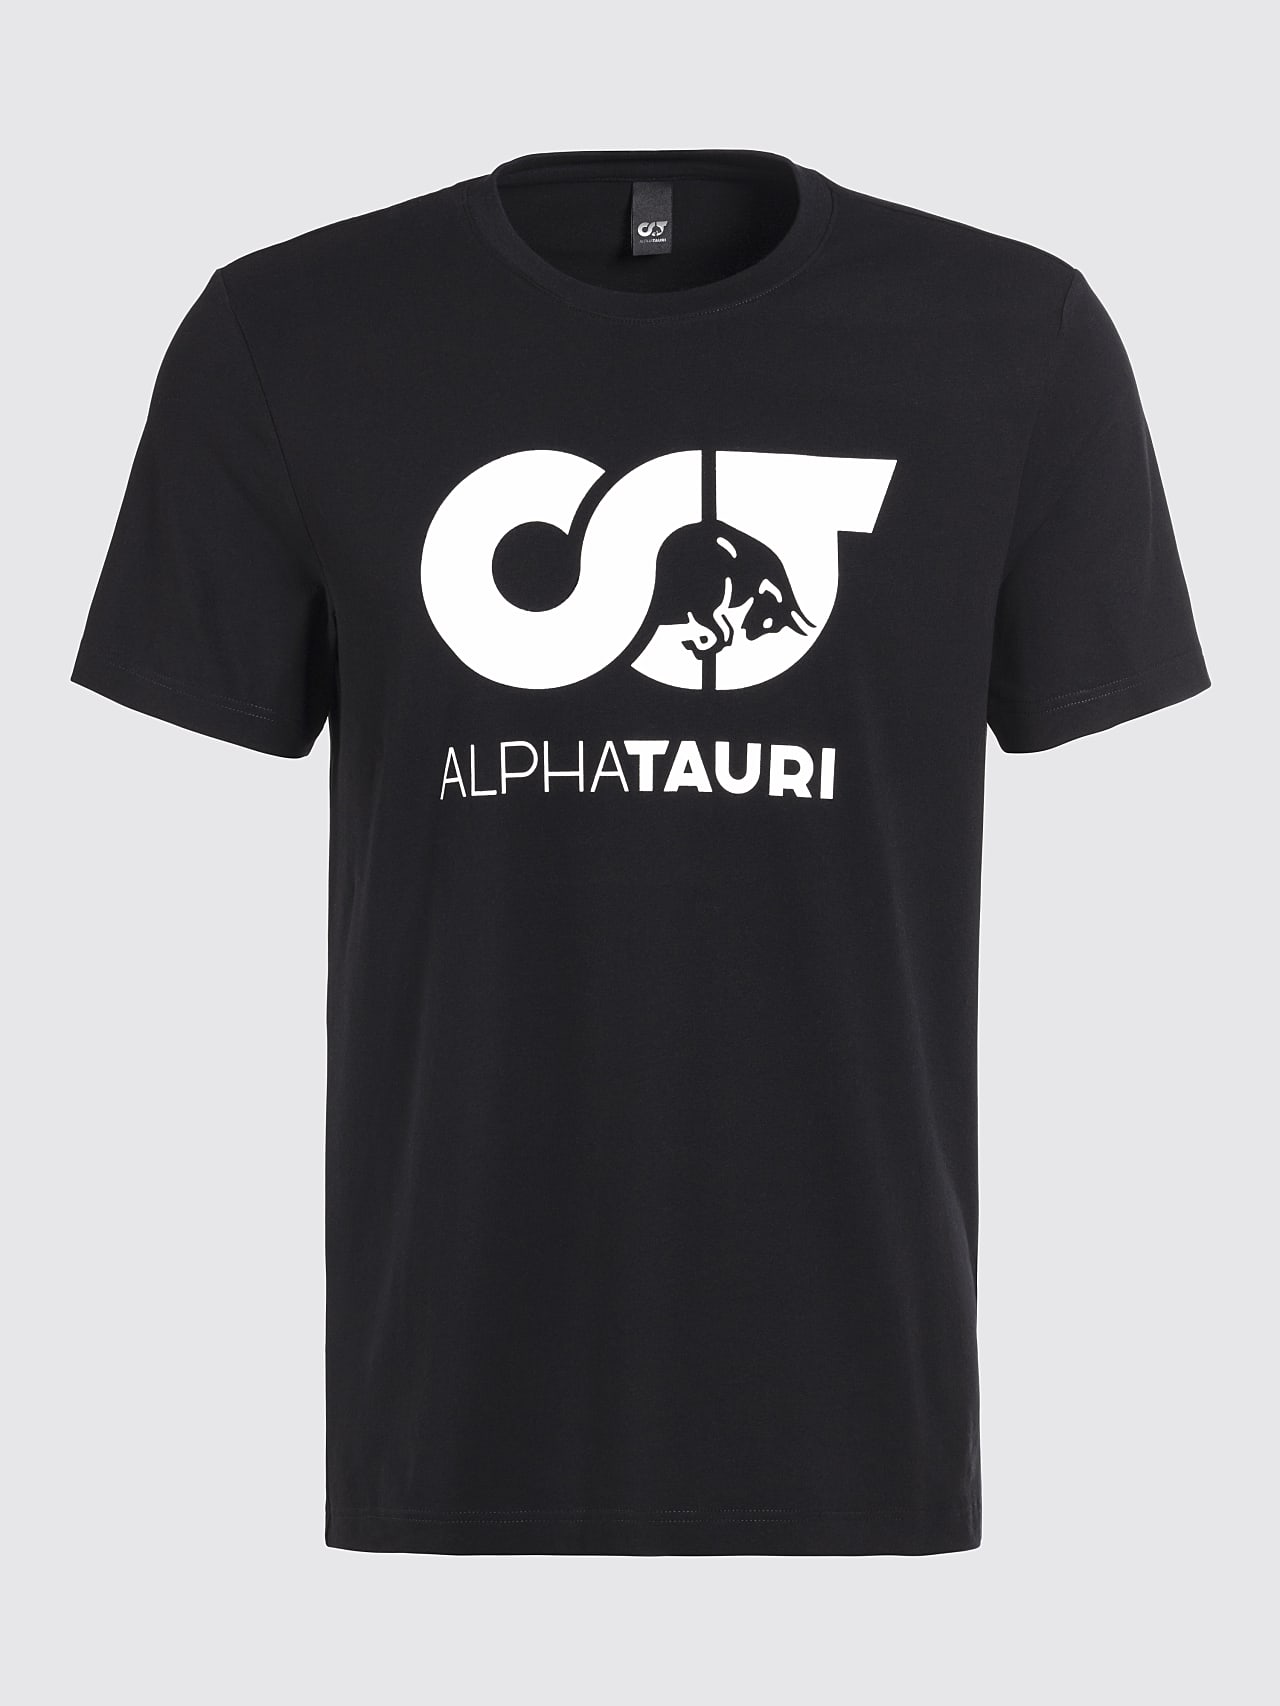 AlphaTauri | JERO V2.Y4.02 | Signature Logo T-Shirt in black for Men